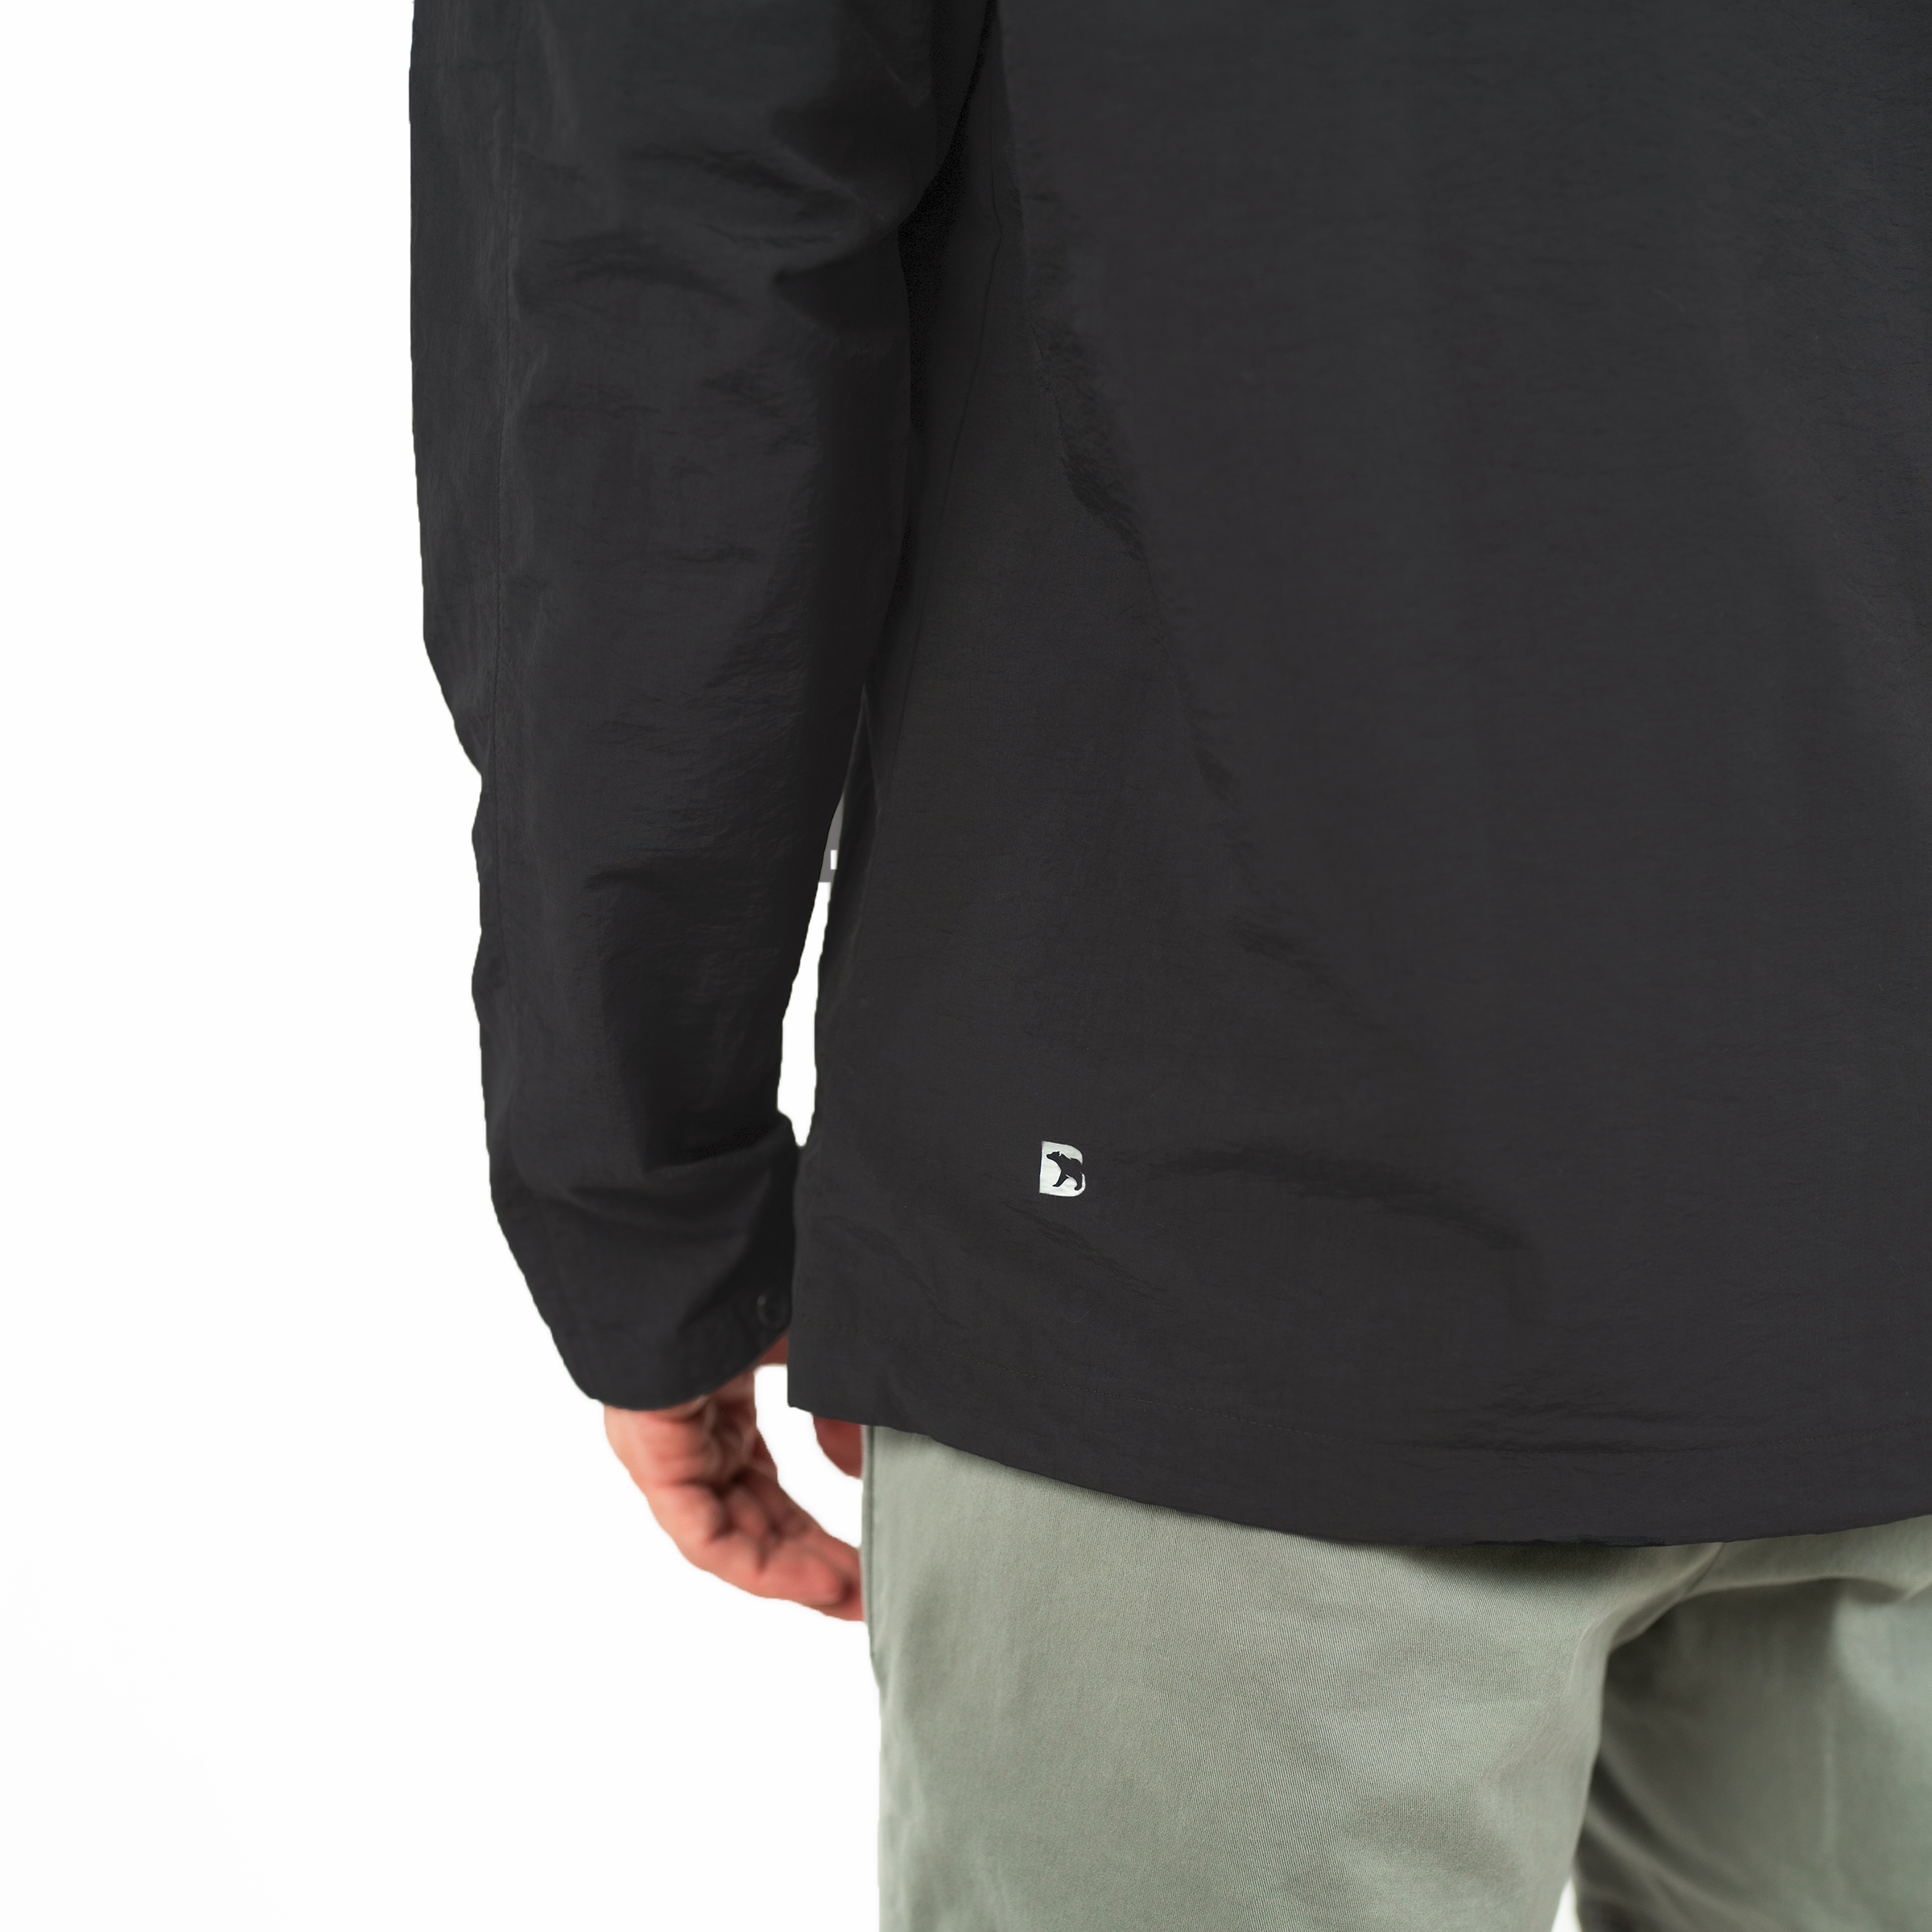 Windbreaker Jacket in Black close up of reflective Bearbottom B logo on back left side